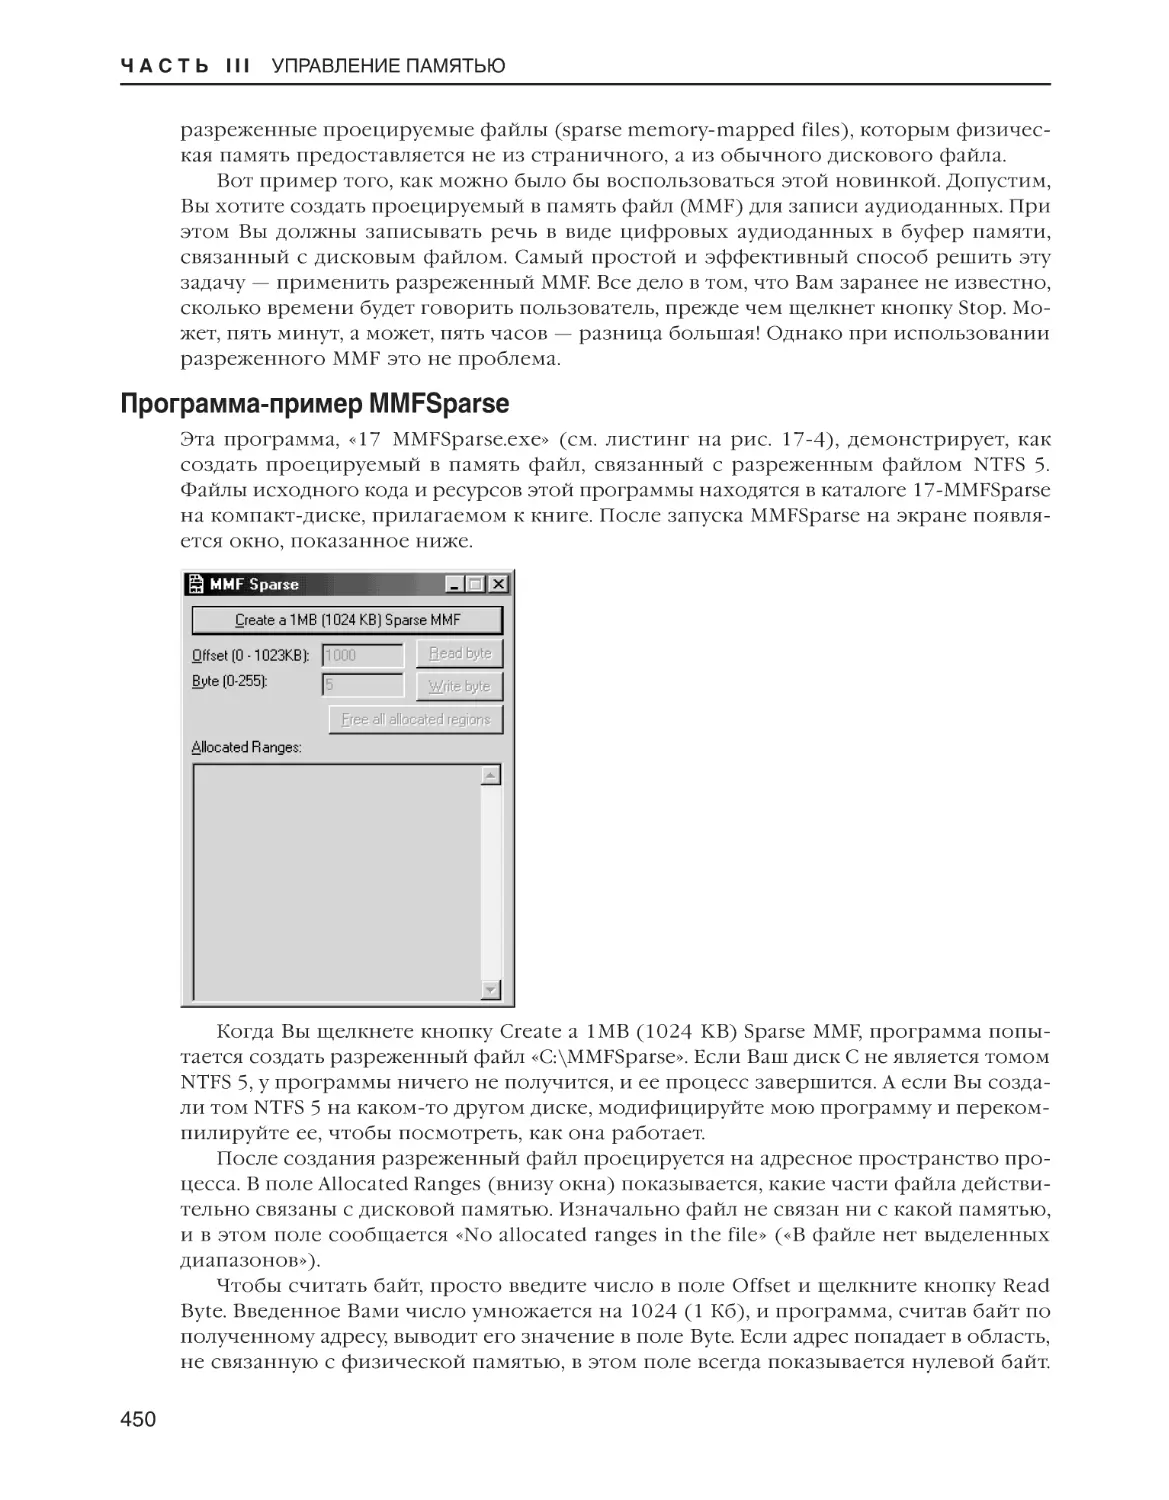 Программа-пример MMFSparse